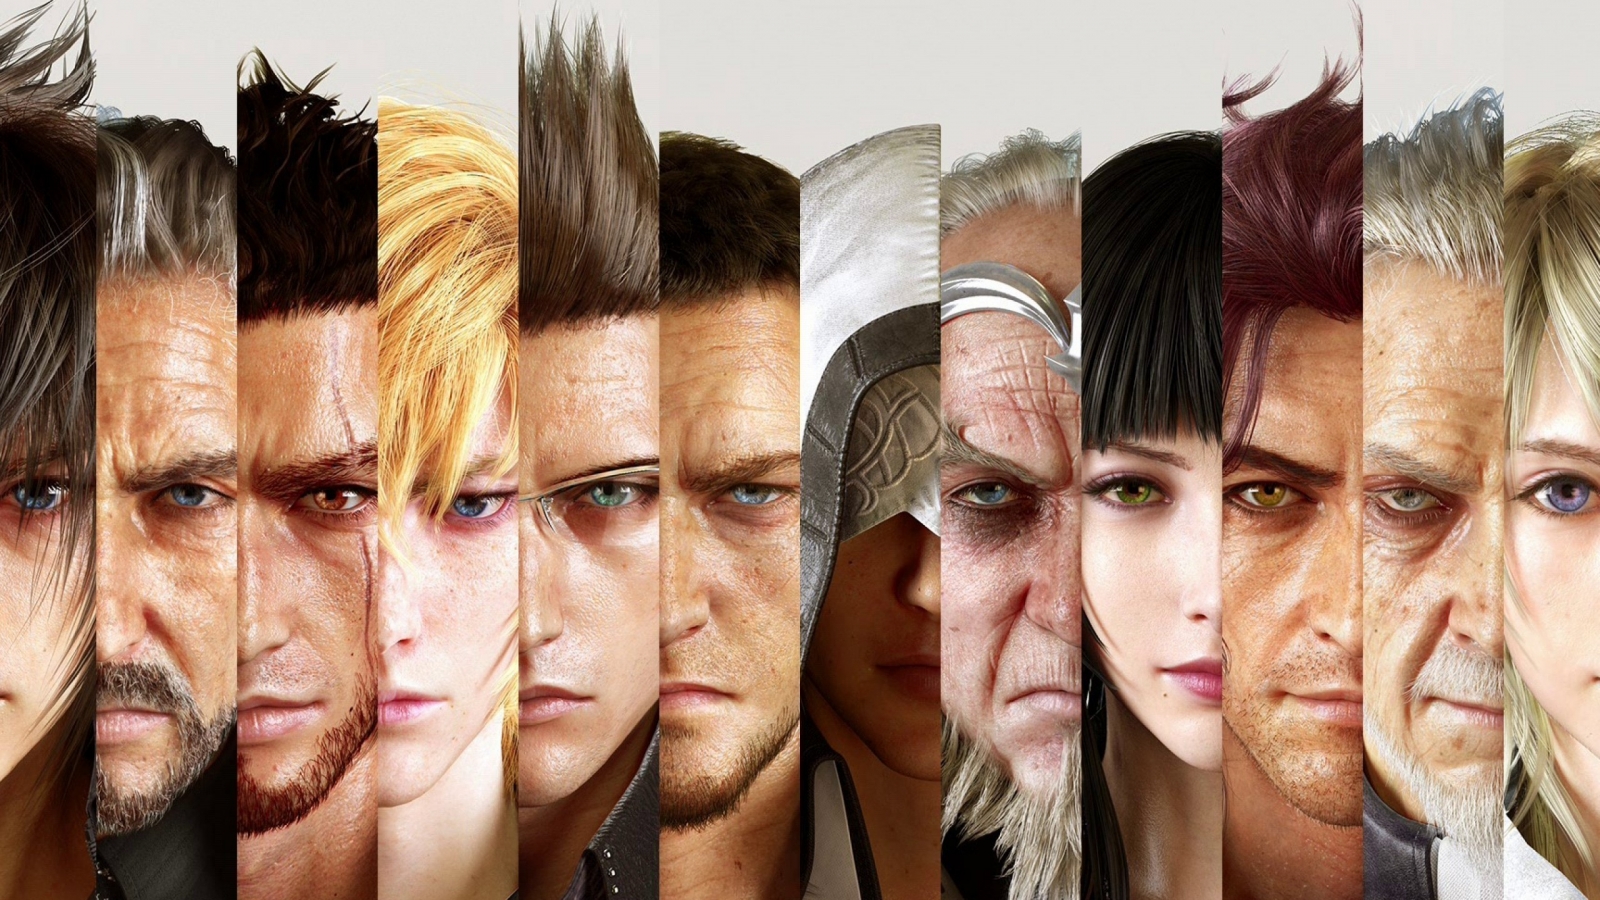 Final Fantasy XV Cast for 1600 x 900 HDTV resolution